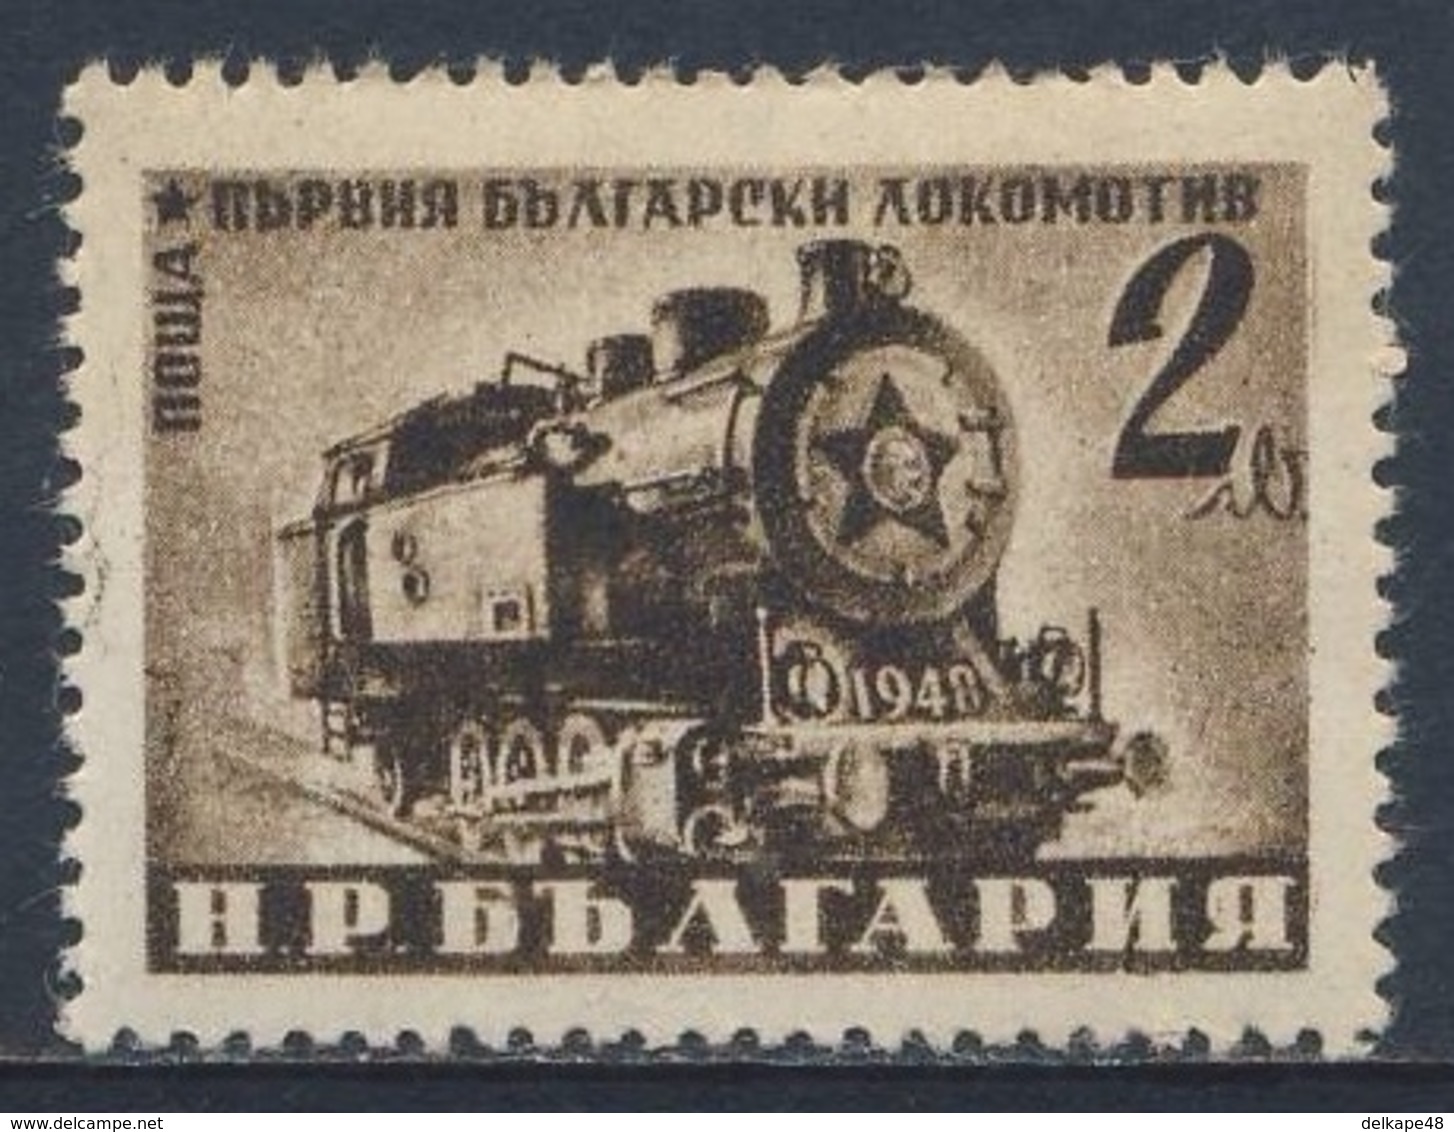 Bulgaria Bulgarien 1950 Mi 726 A YT 633 SG 774 A ** Class 48 Steam Shunting Locomotive / Lokomotive - Volkswirtschaft - Trains